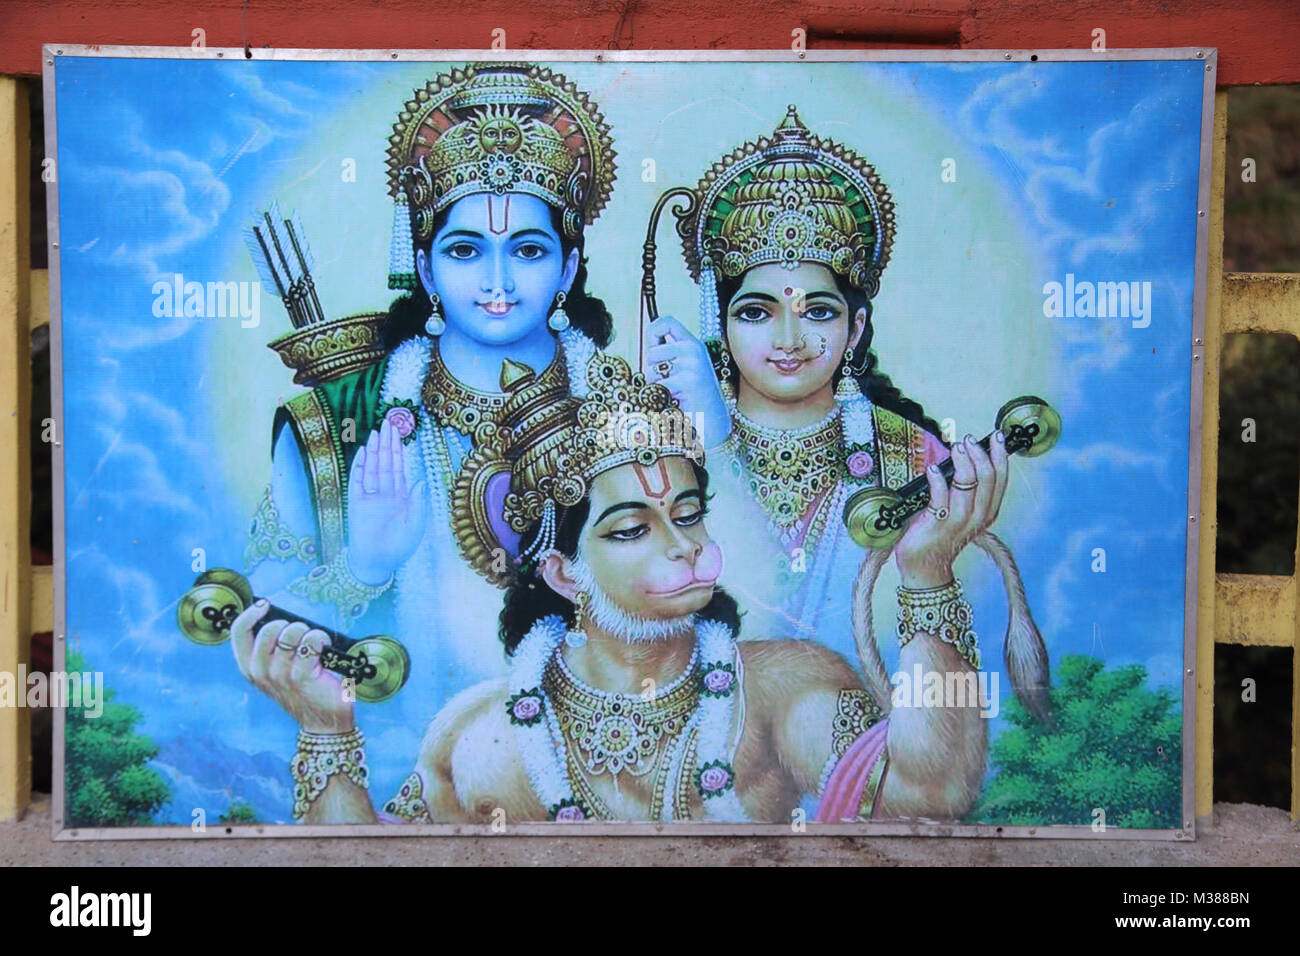 Sita Amman Temple Seetha Eliya Central Province Sri Lanka Said to be the spot where Ravana Held Sita Captive In The Ramayana Painting Of Lord Rama, Sita And Hanuman Stock Photo